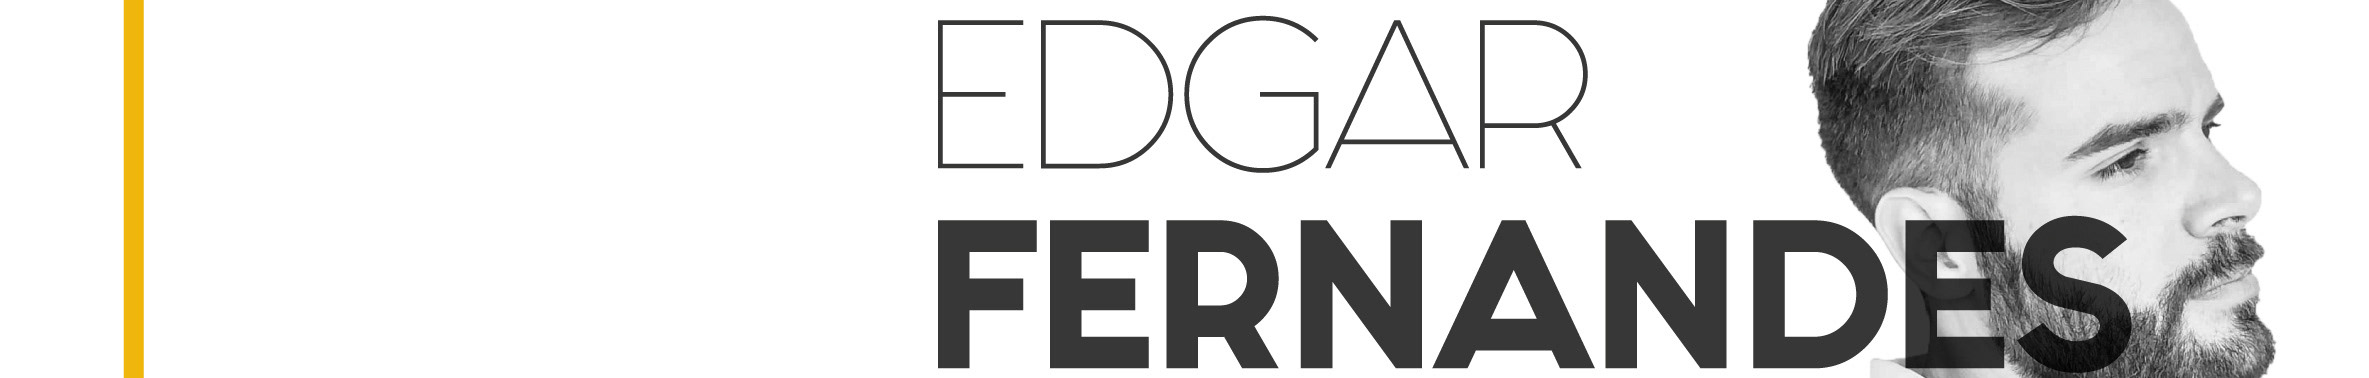 Edgar Fernandes profil başlığı